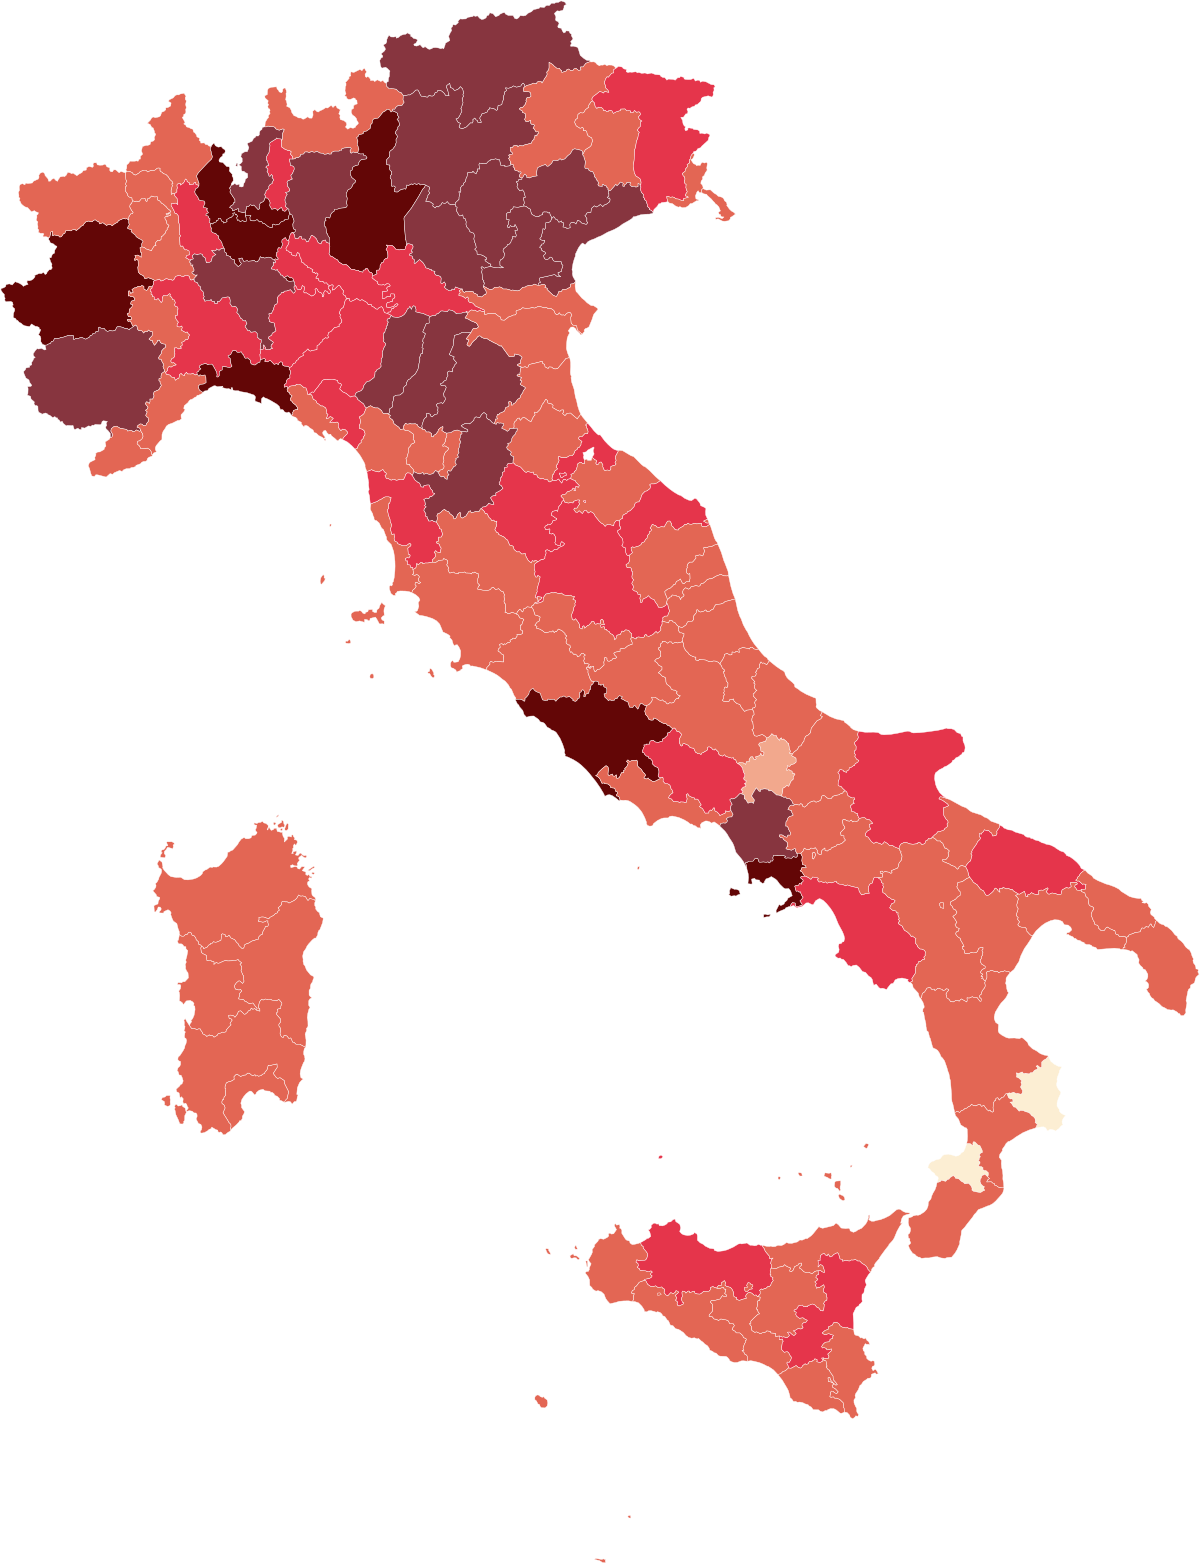 Pandemia de COVID-19 en Italia - Wikipedia, la enciclopedia libre